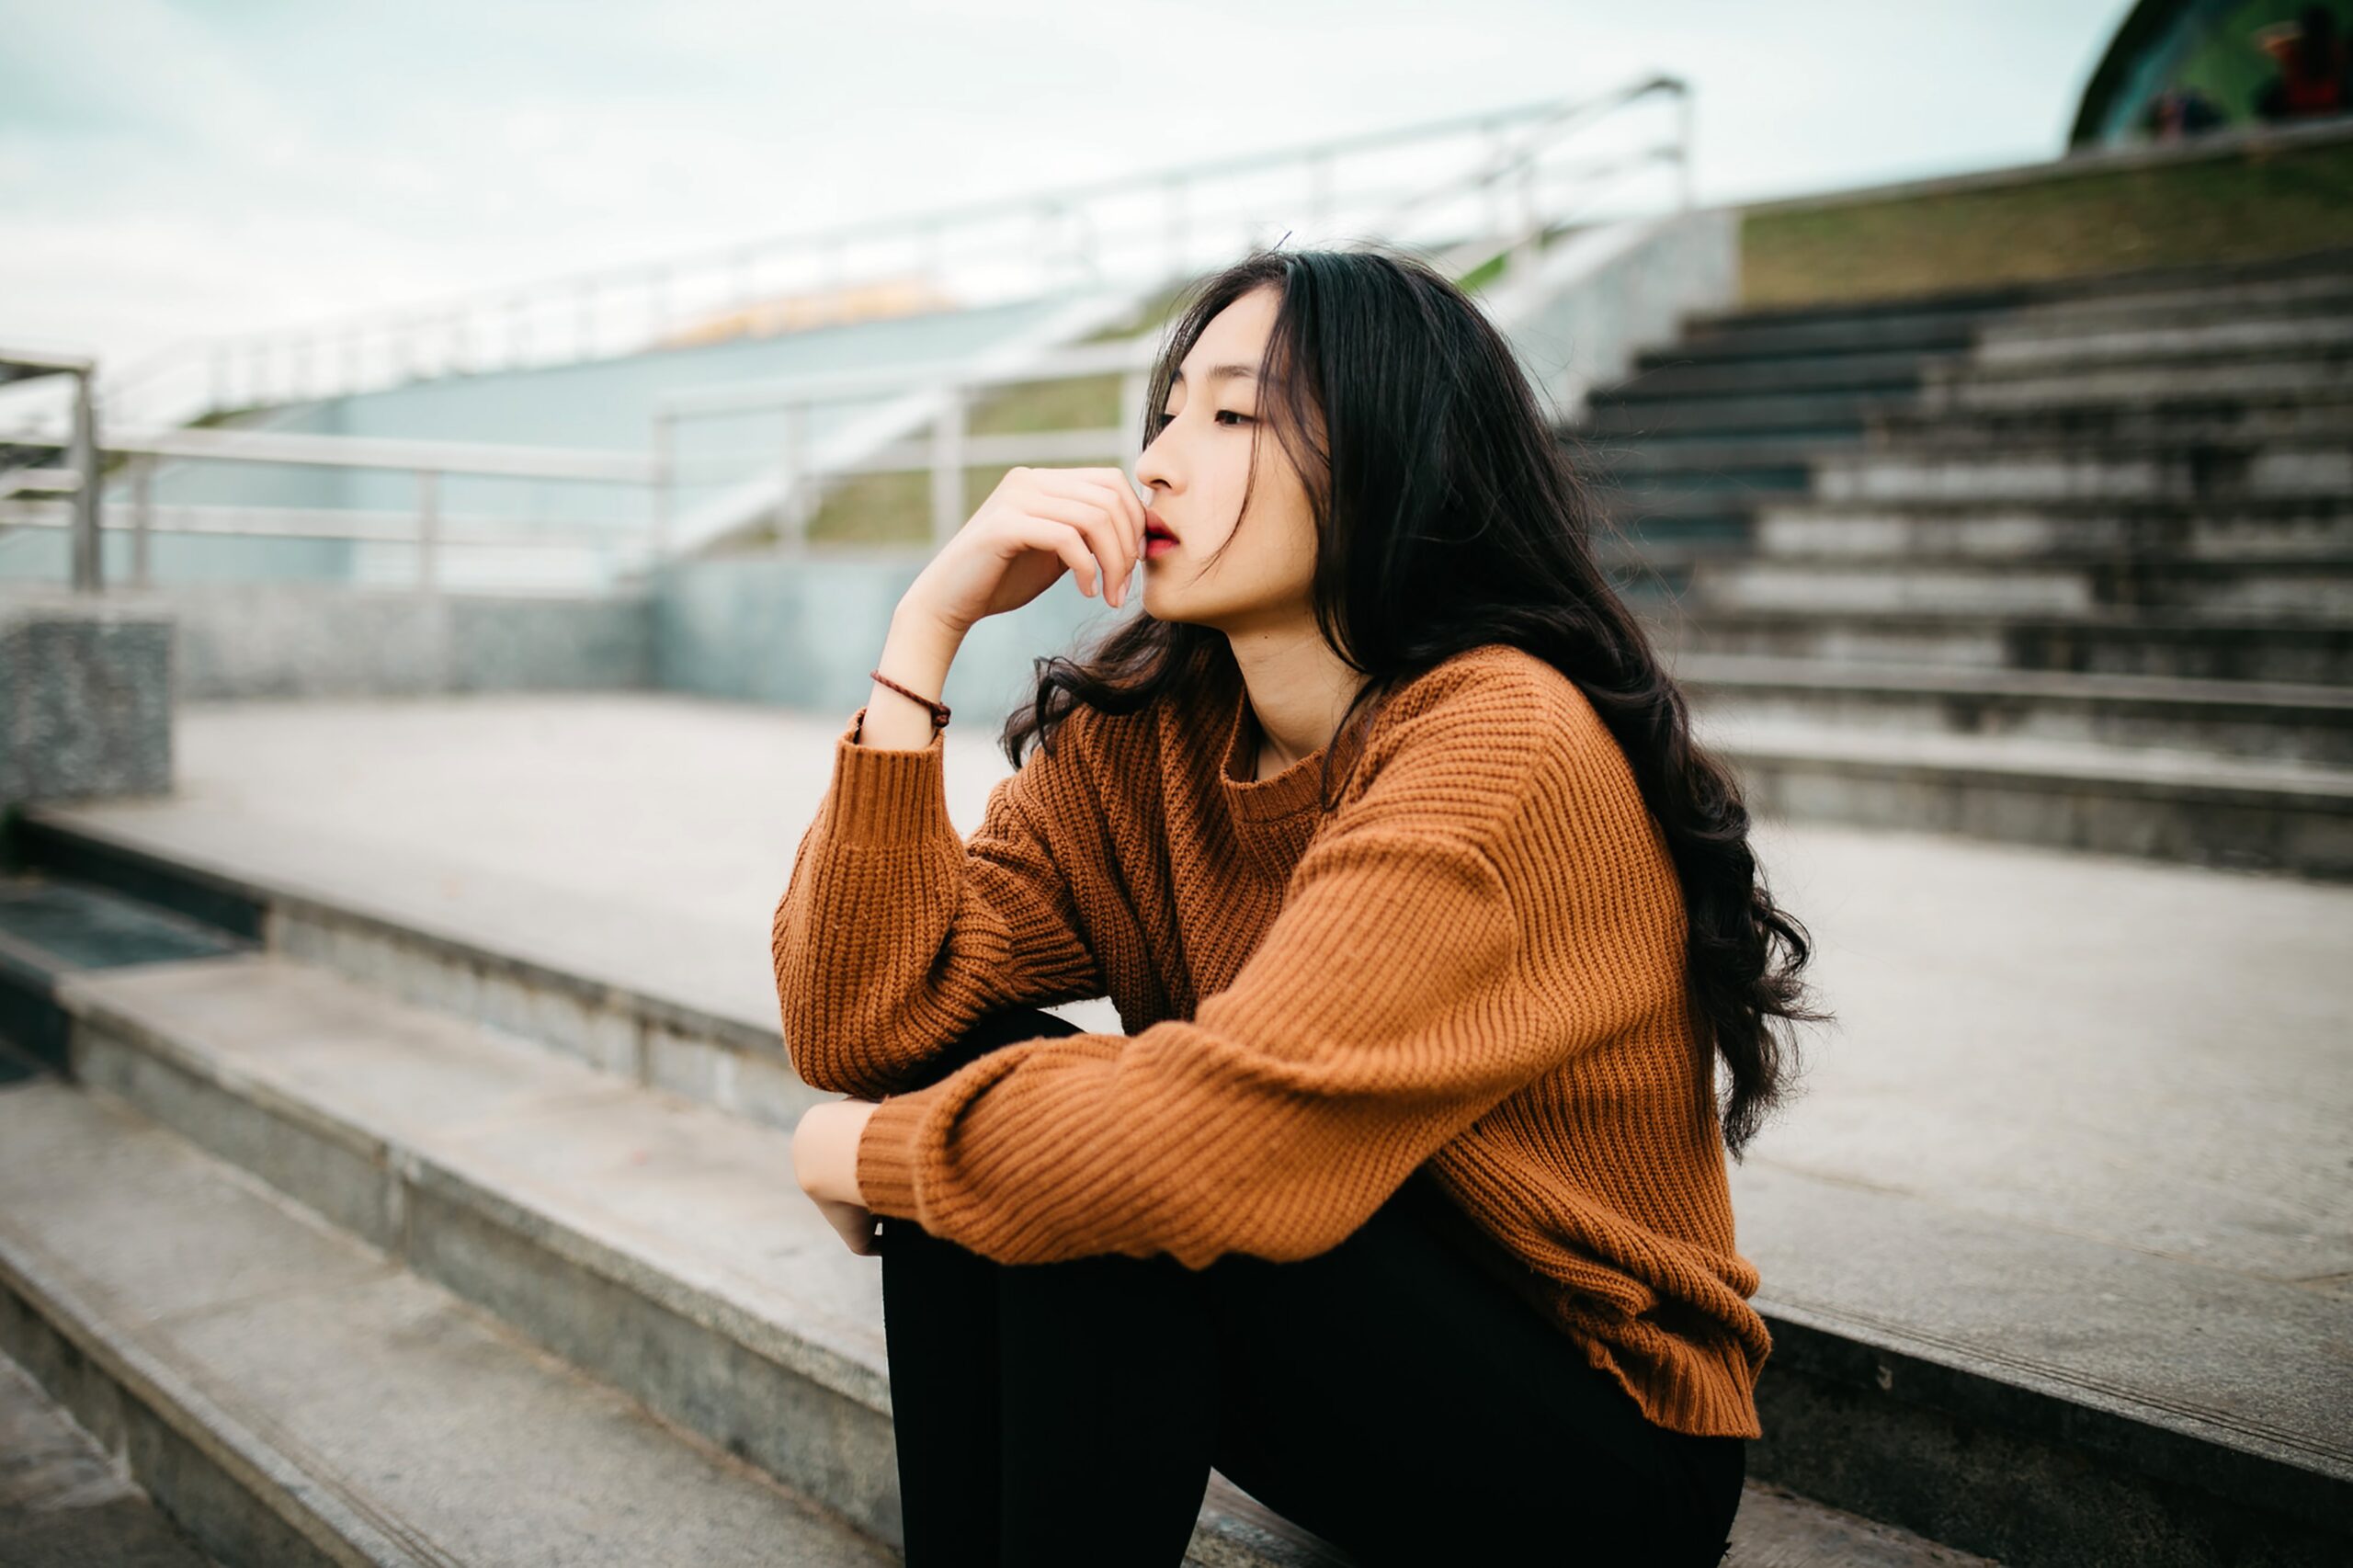 Asian woman sitting on outdoor stadium stairs thinking